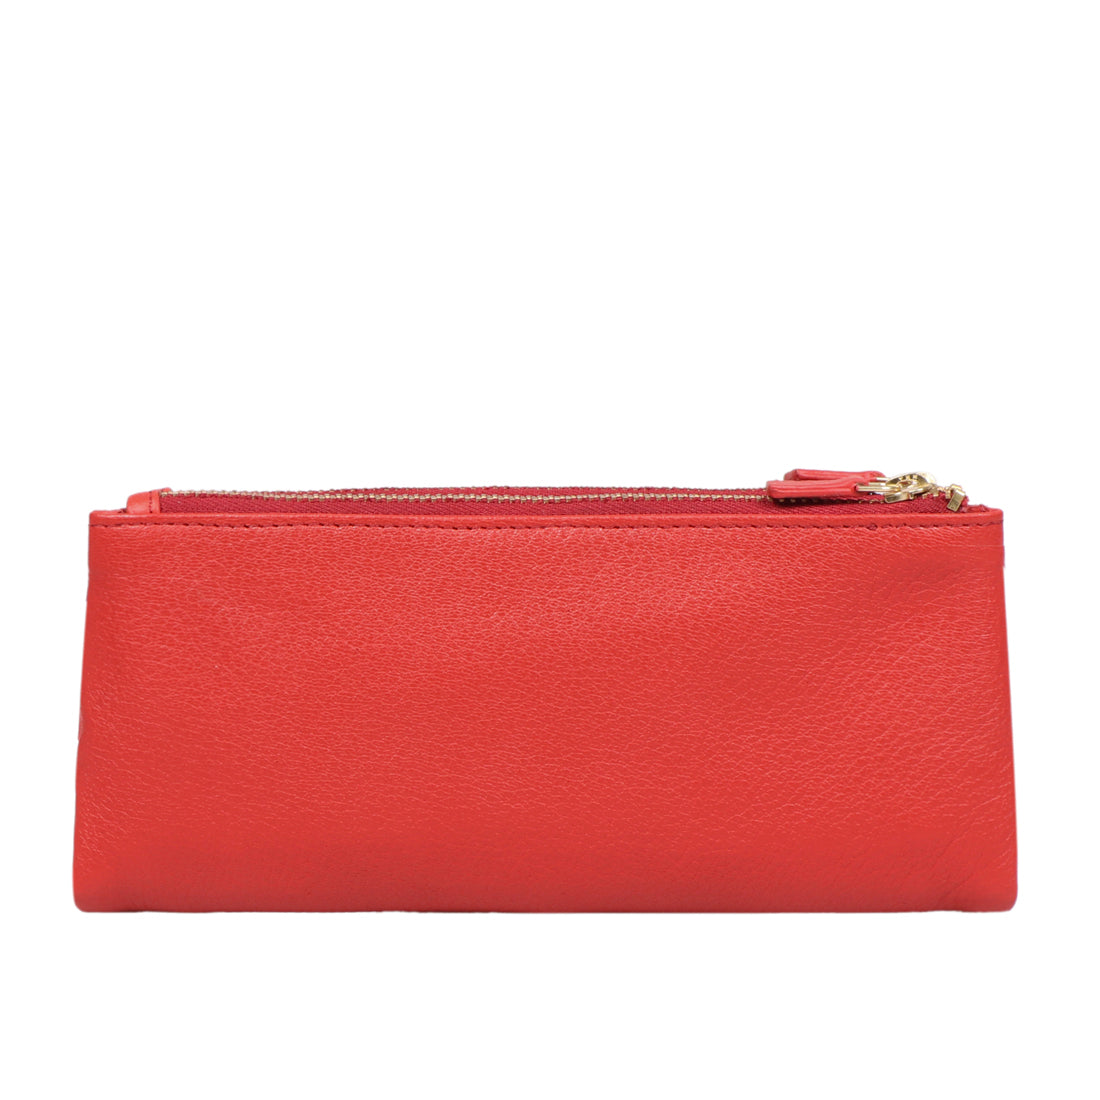 Hermès Vintage - Dogon Leather Long Wallet - Red - Leather Wallet